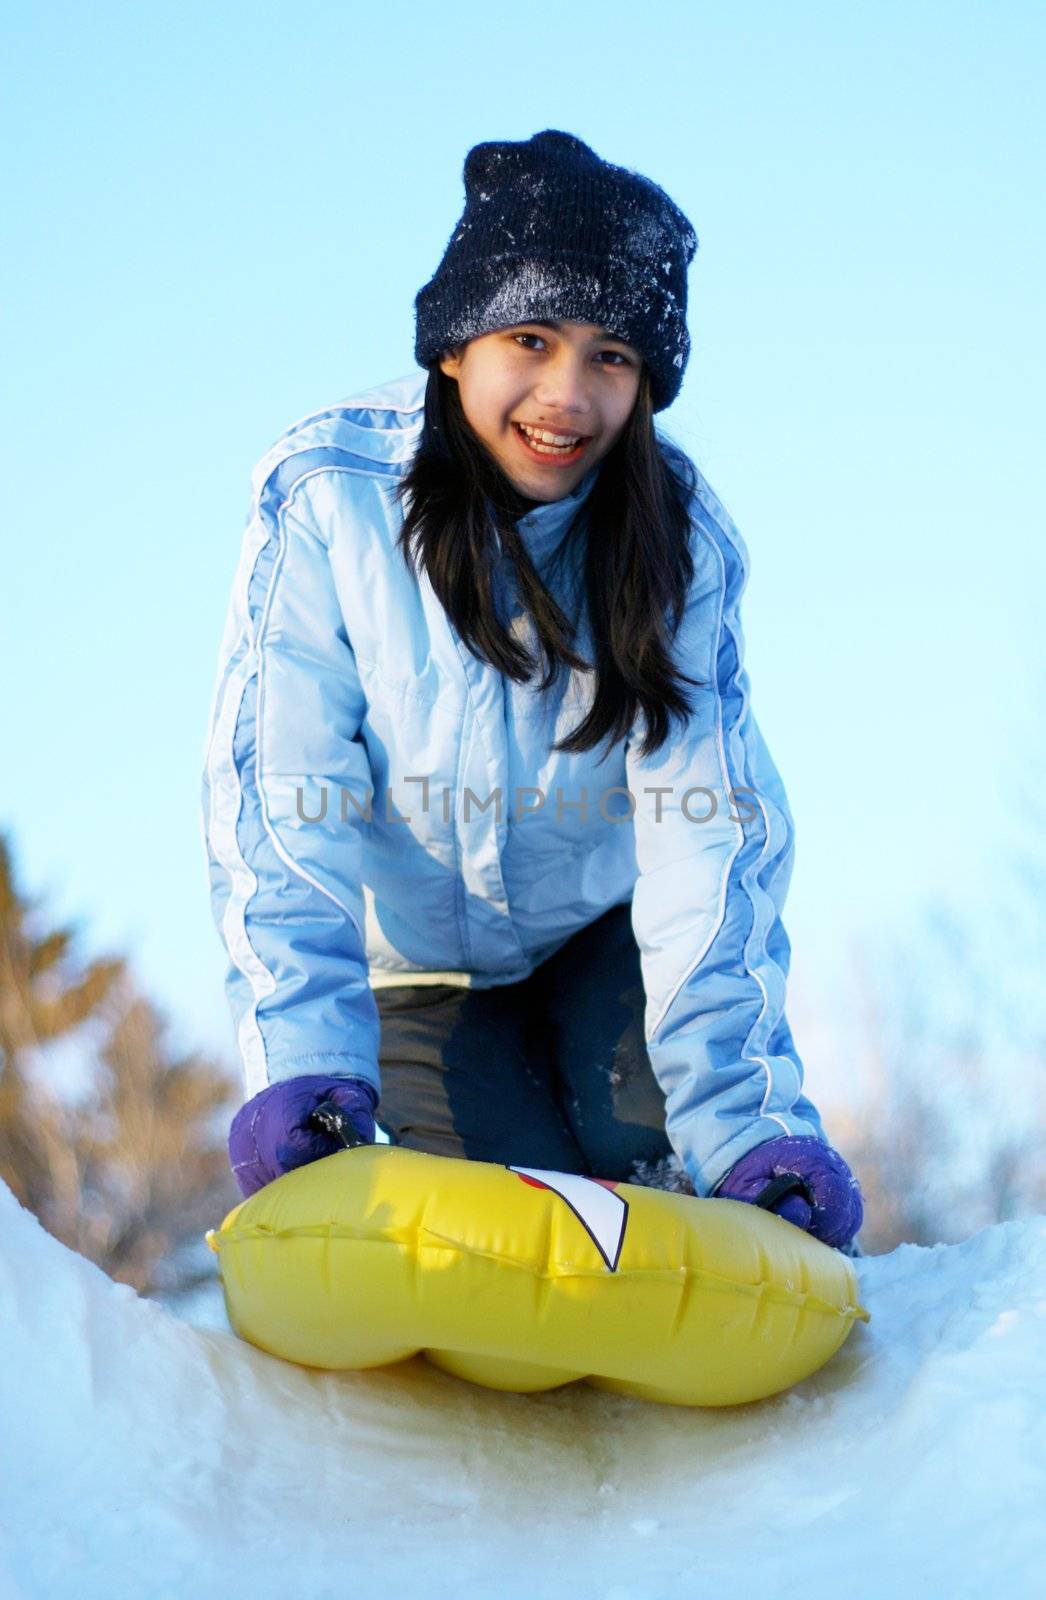 Young teen girl sledding down hill